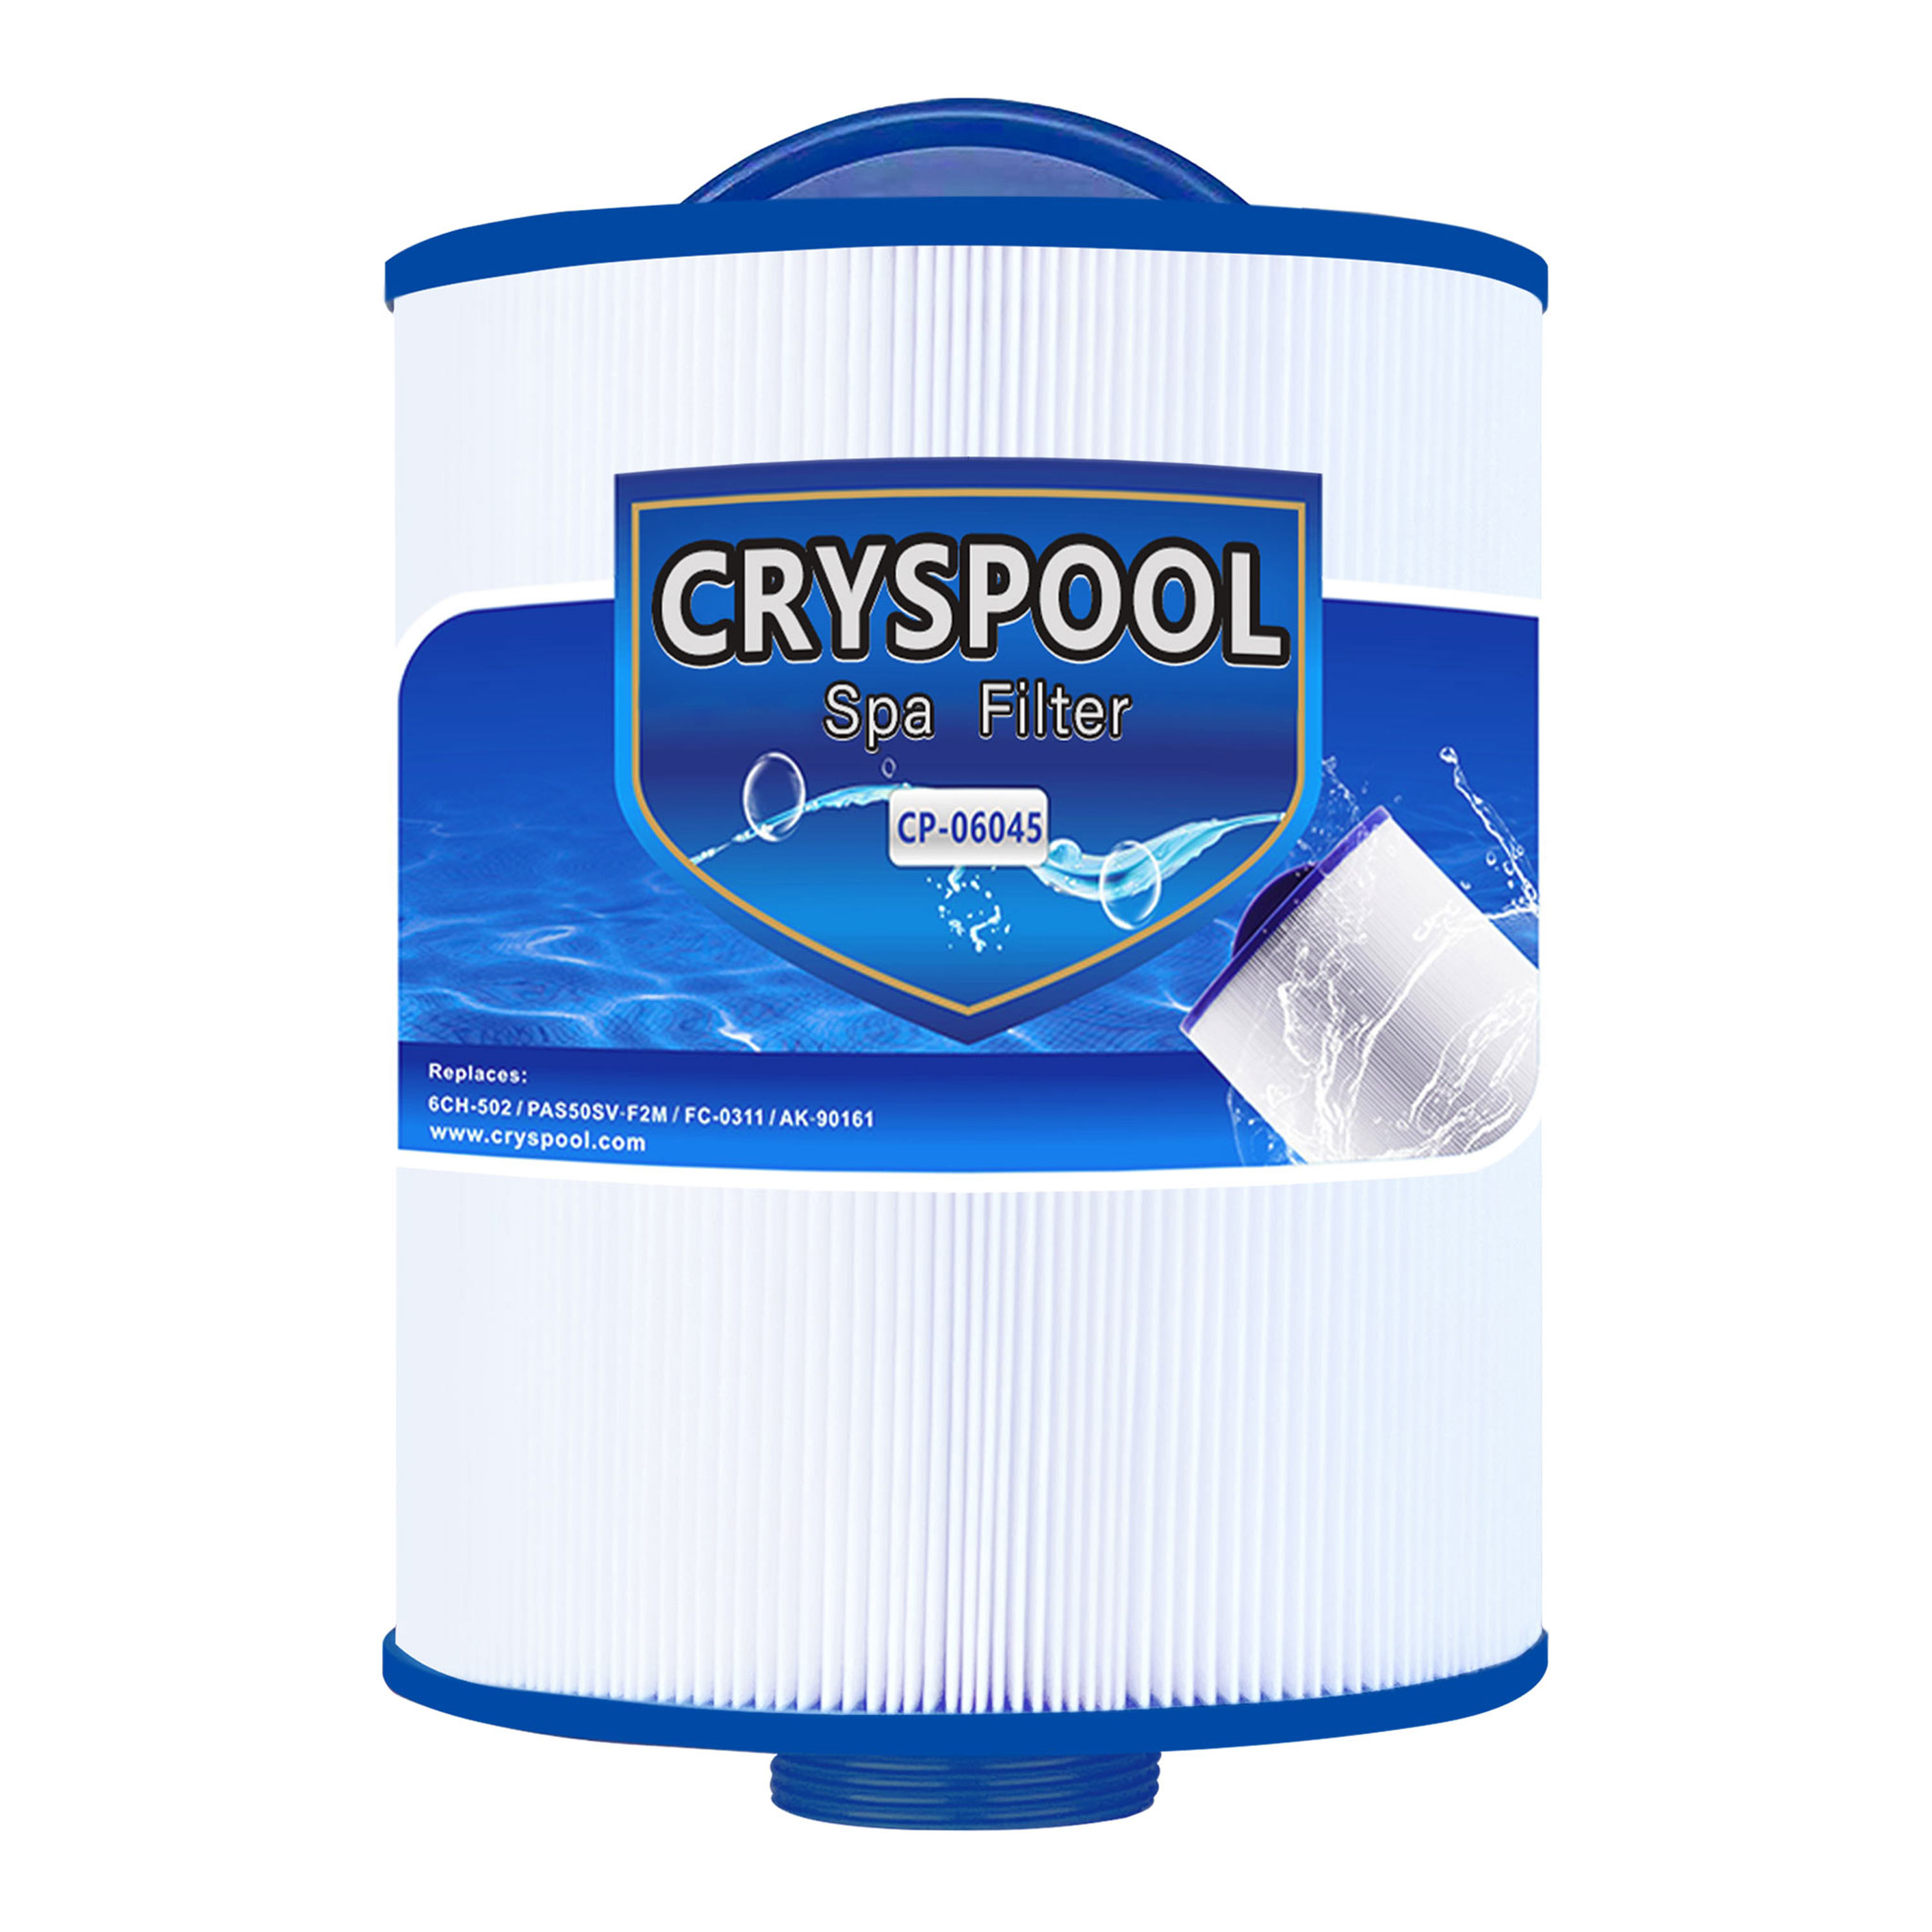 Cryspool Spa Filter Compatible with Artesian Spas, Tidal Fit Swim 06-0006-12, 06-0005-12,Unicel 6CH-502, PAS50SV-F2M, Filbur FC-0311, 50 sq.ft,